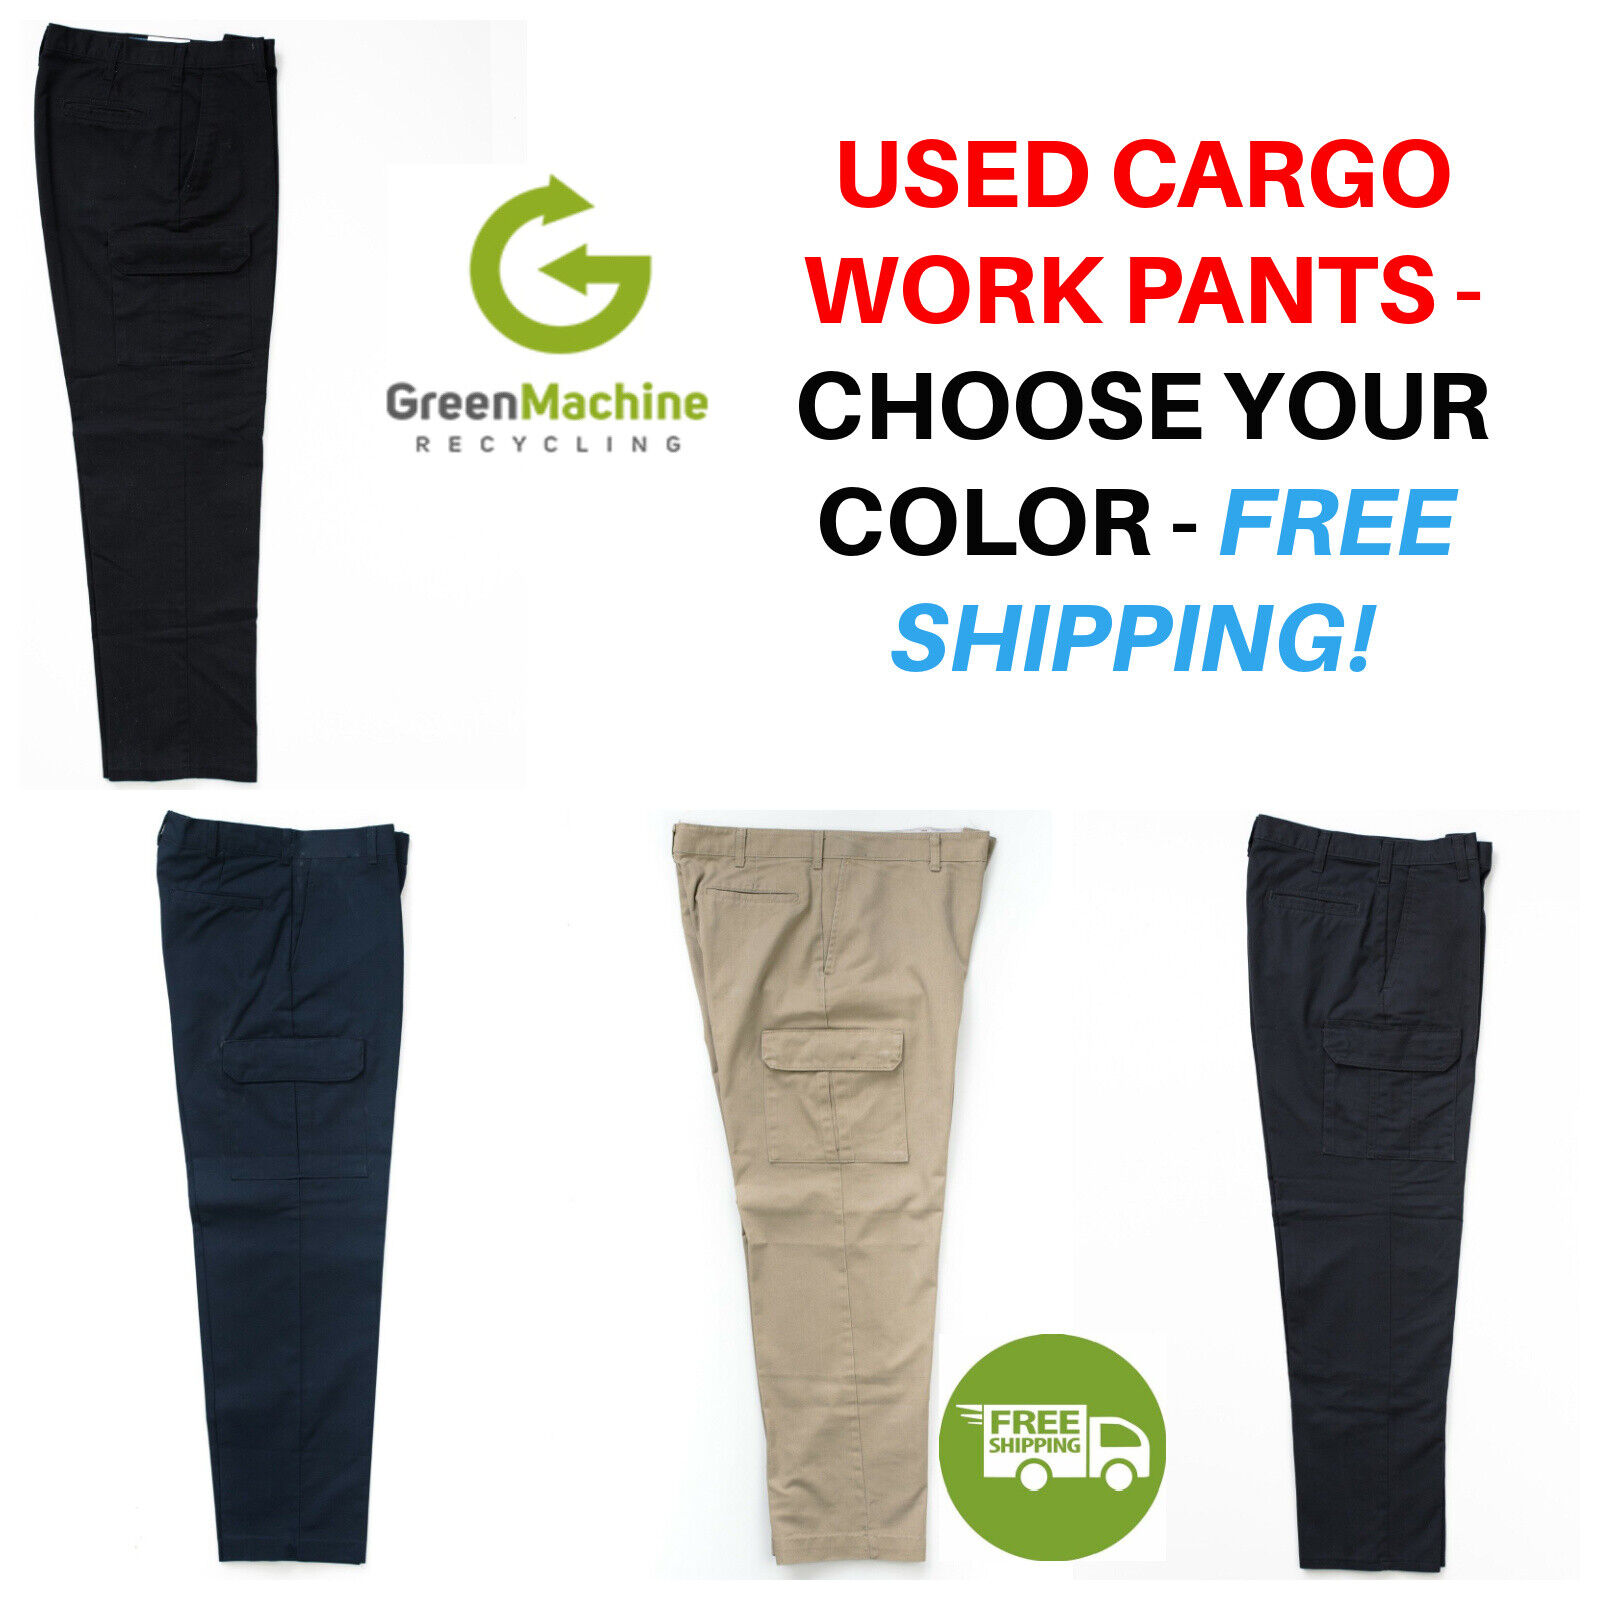 Used Uniform Work Pants Cargo Cintas Redkap Unifirst G&K Dic